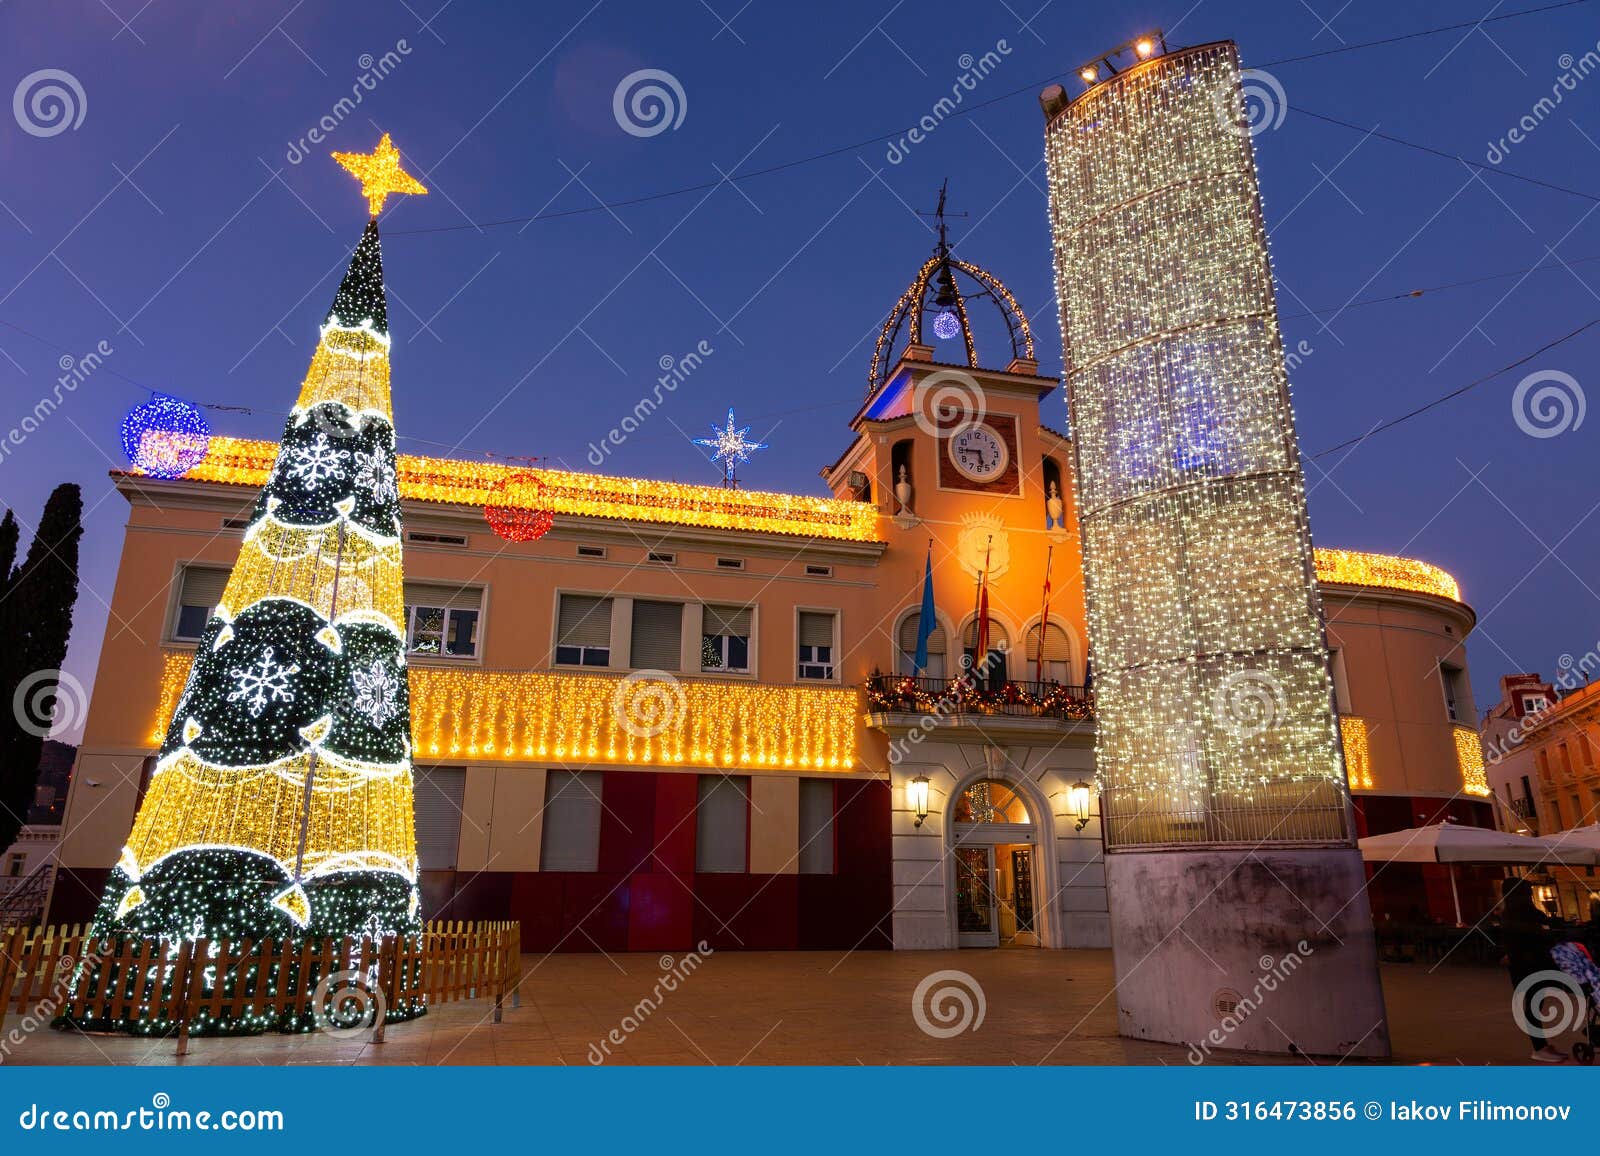 city hall of city sants coloma de gramenet at christmas time